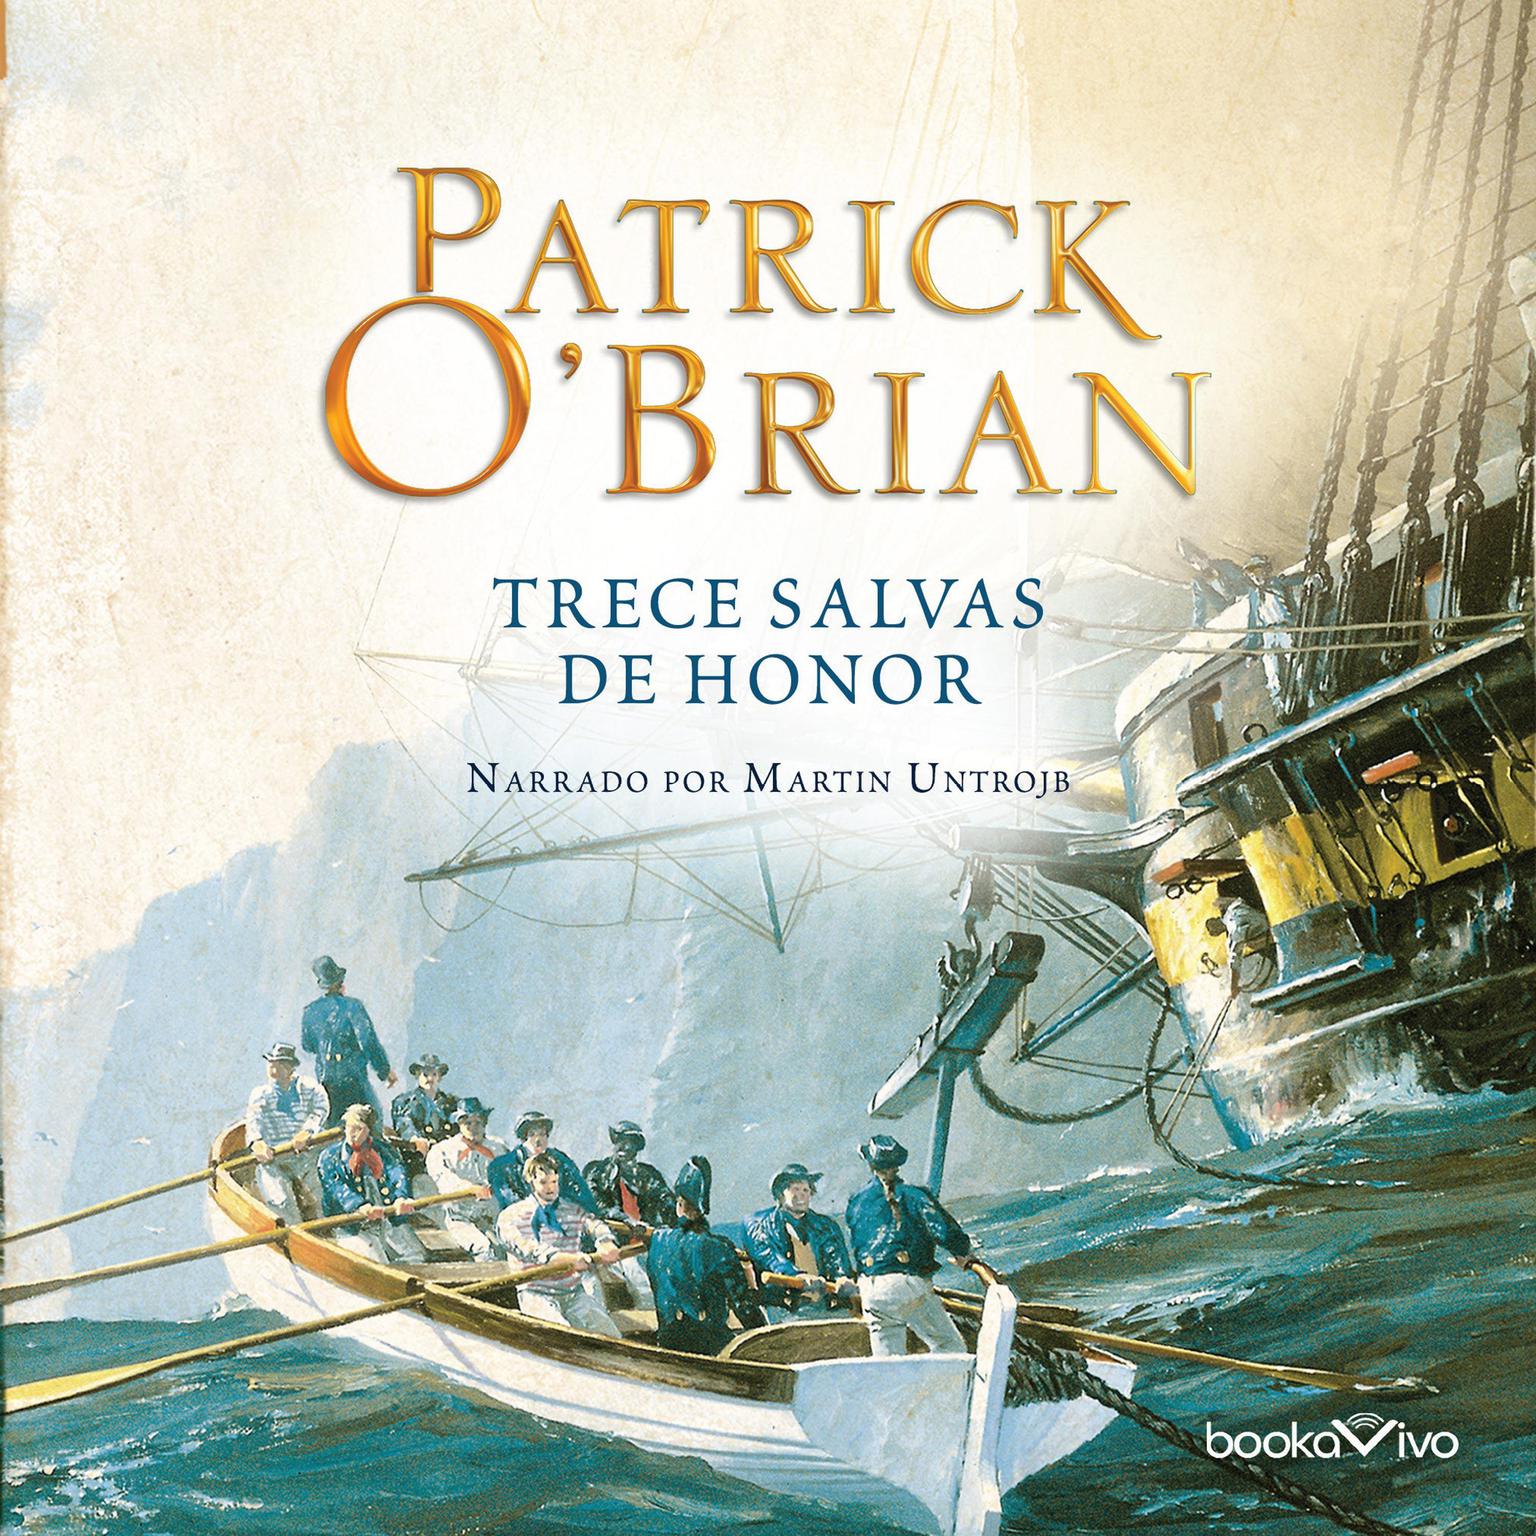 Trece Salvas de Honor (The Thirteen Gun Salute) Audiobook, by Patrick O'Brian